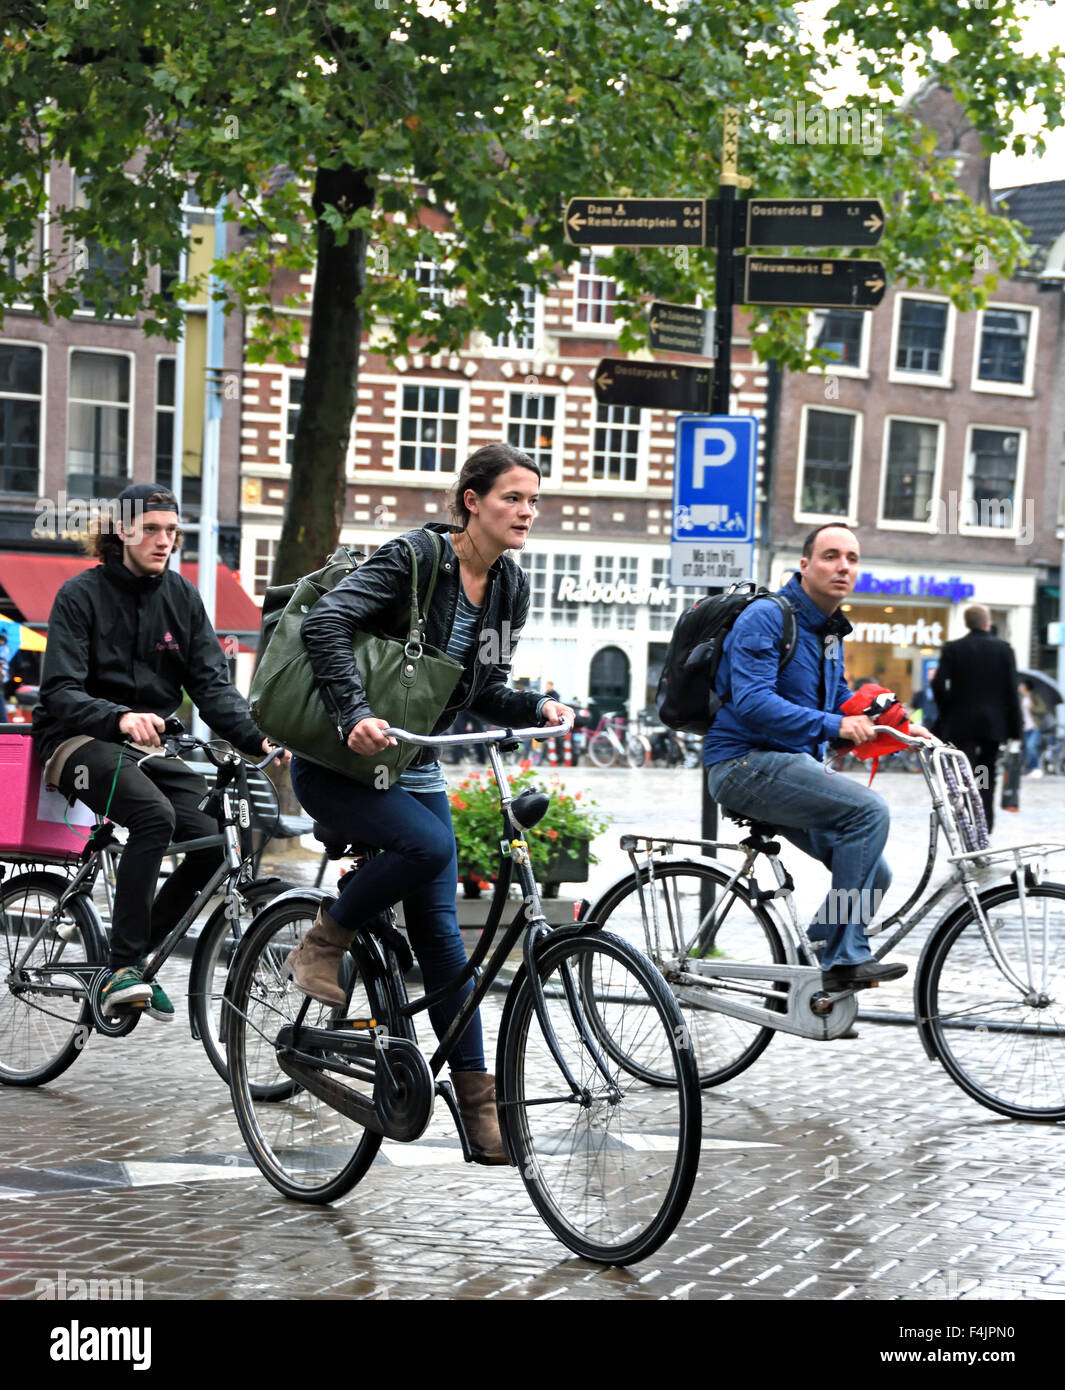 Biciclette in pioggia Nieuwmarkt Amsterdam Paesi Bassi, Olanda olandese Foto Stock